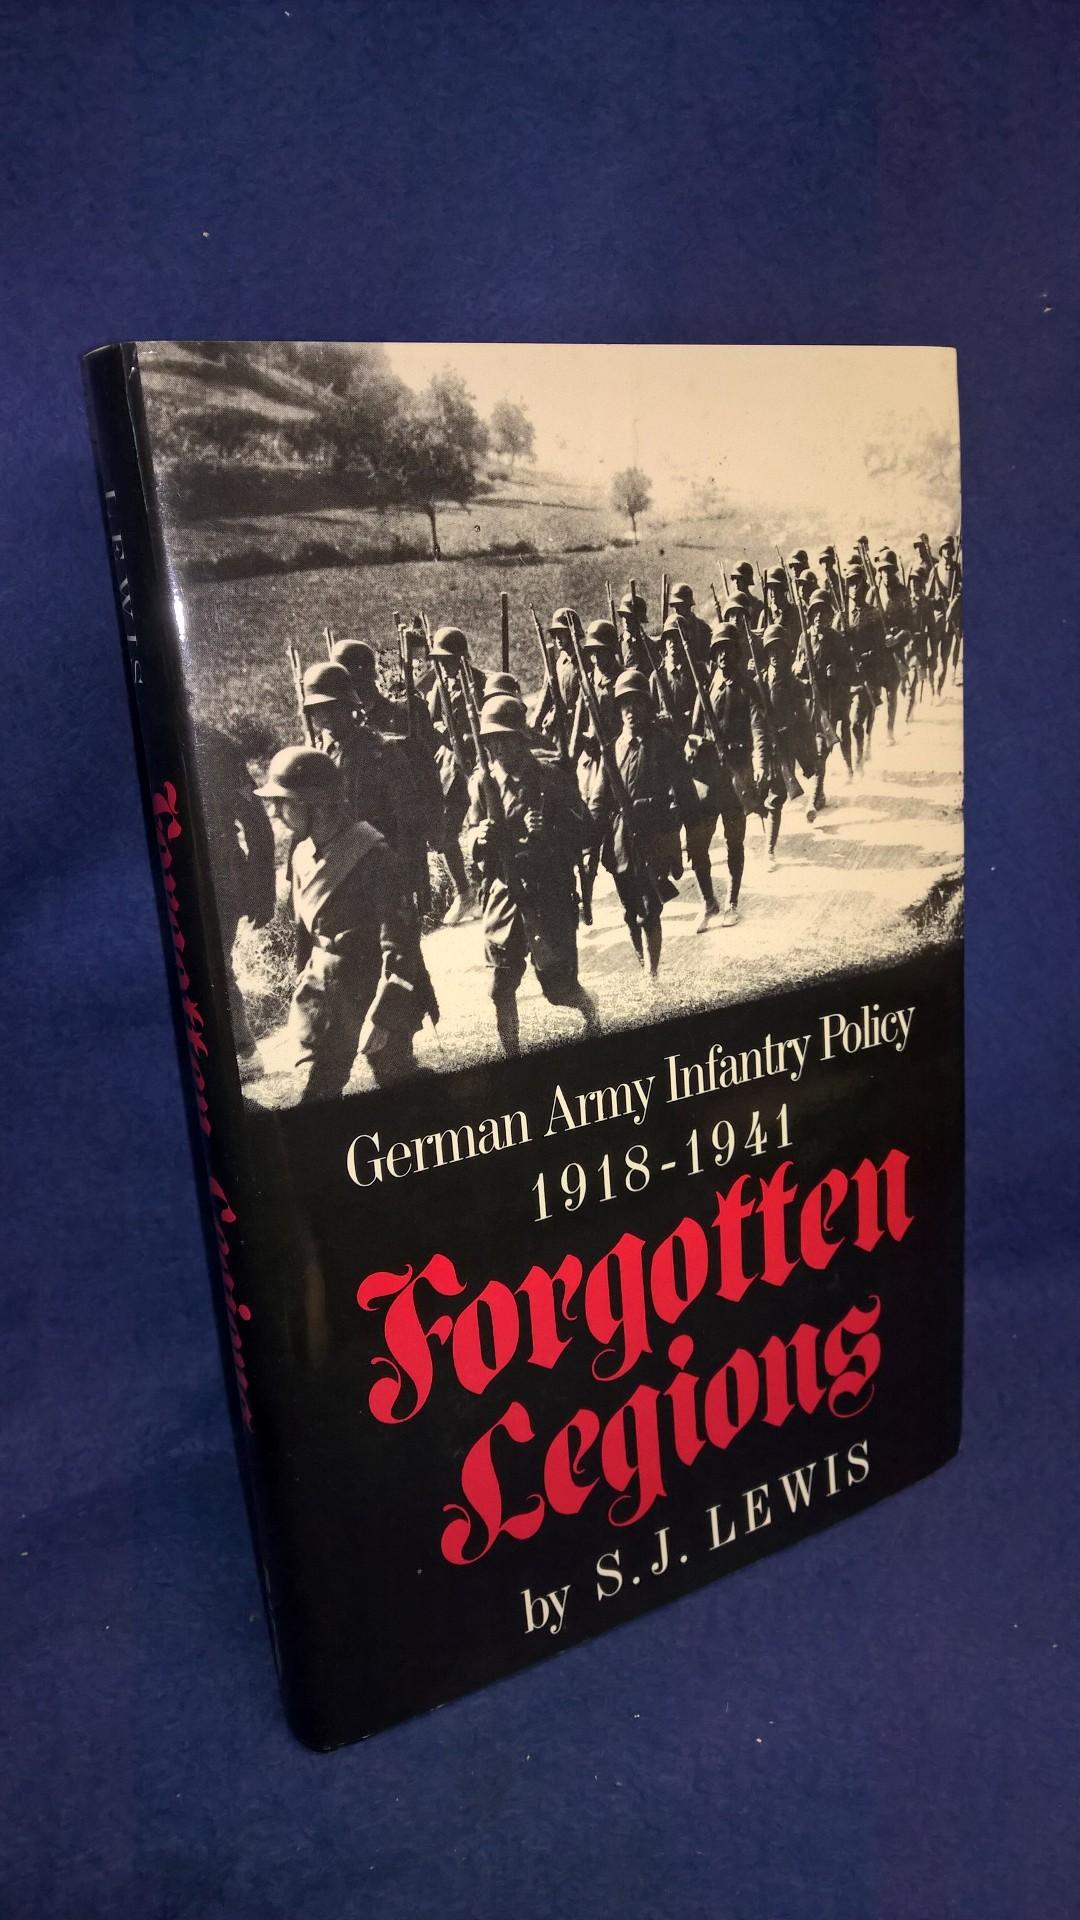 Forgotten Legions: German Army Infantry Policy 1918-1941.